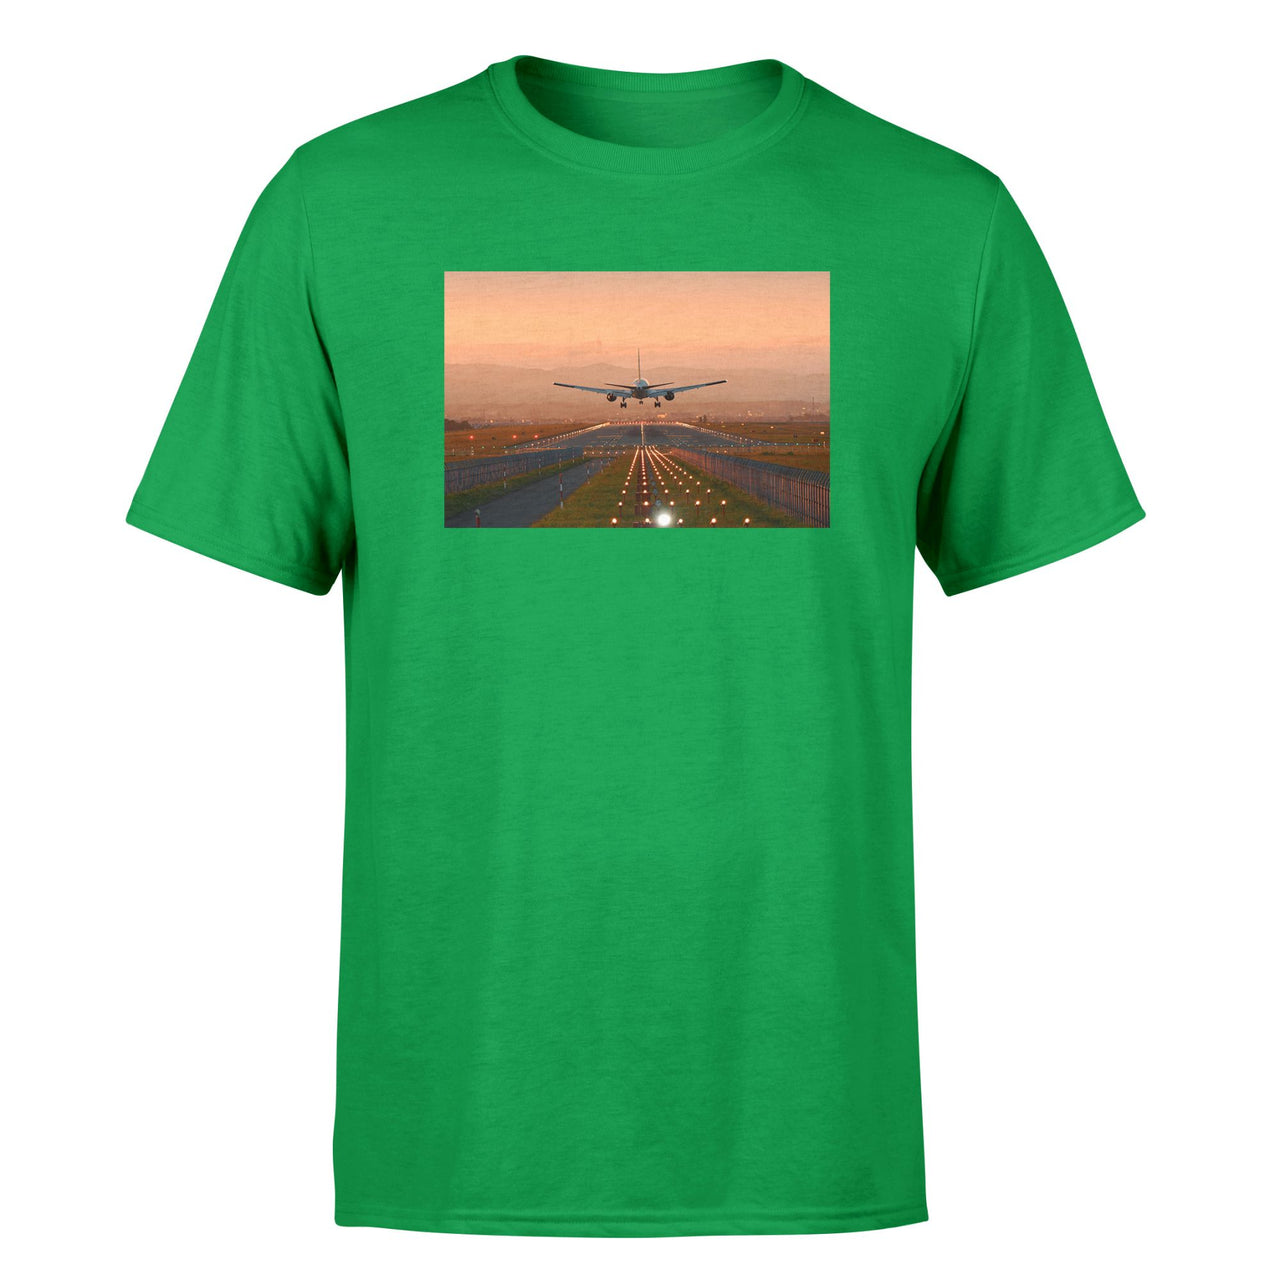 Super Cool Landing During Sunset Designed T-Shirts